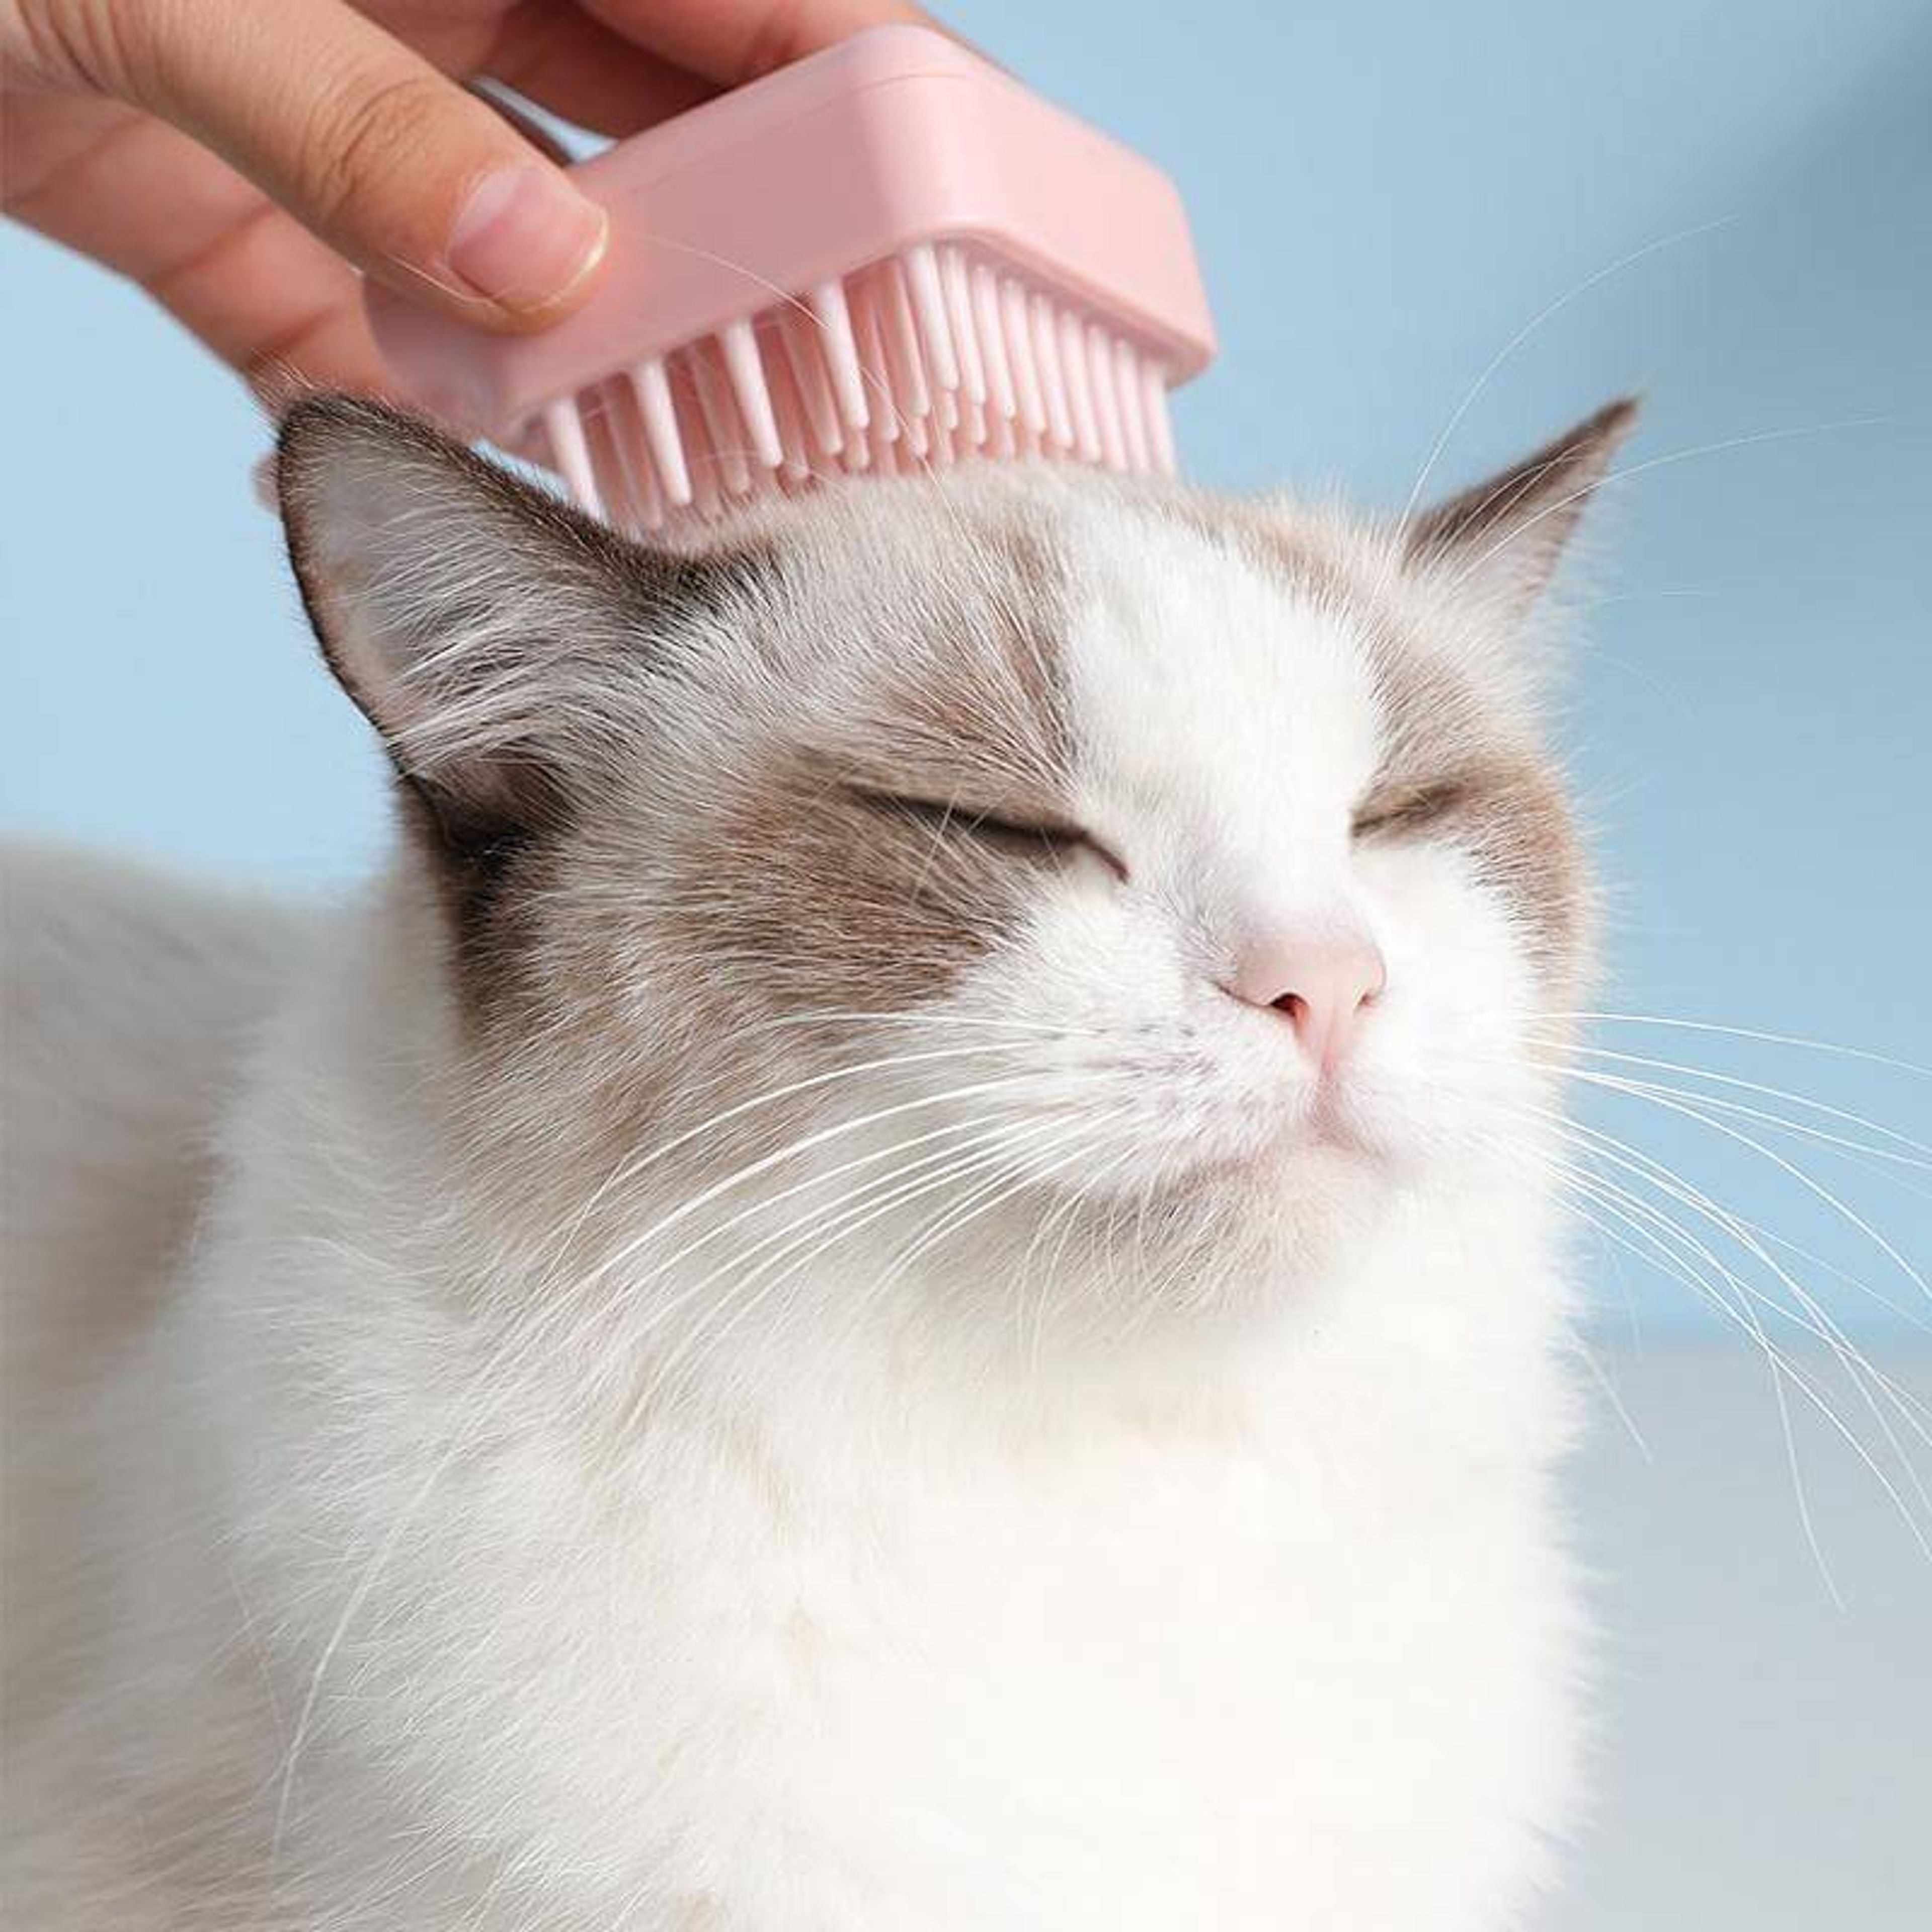 Pet Grooming Brush - Dog & Cat Bath Comb and Massage Brush